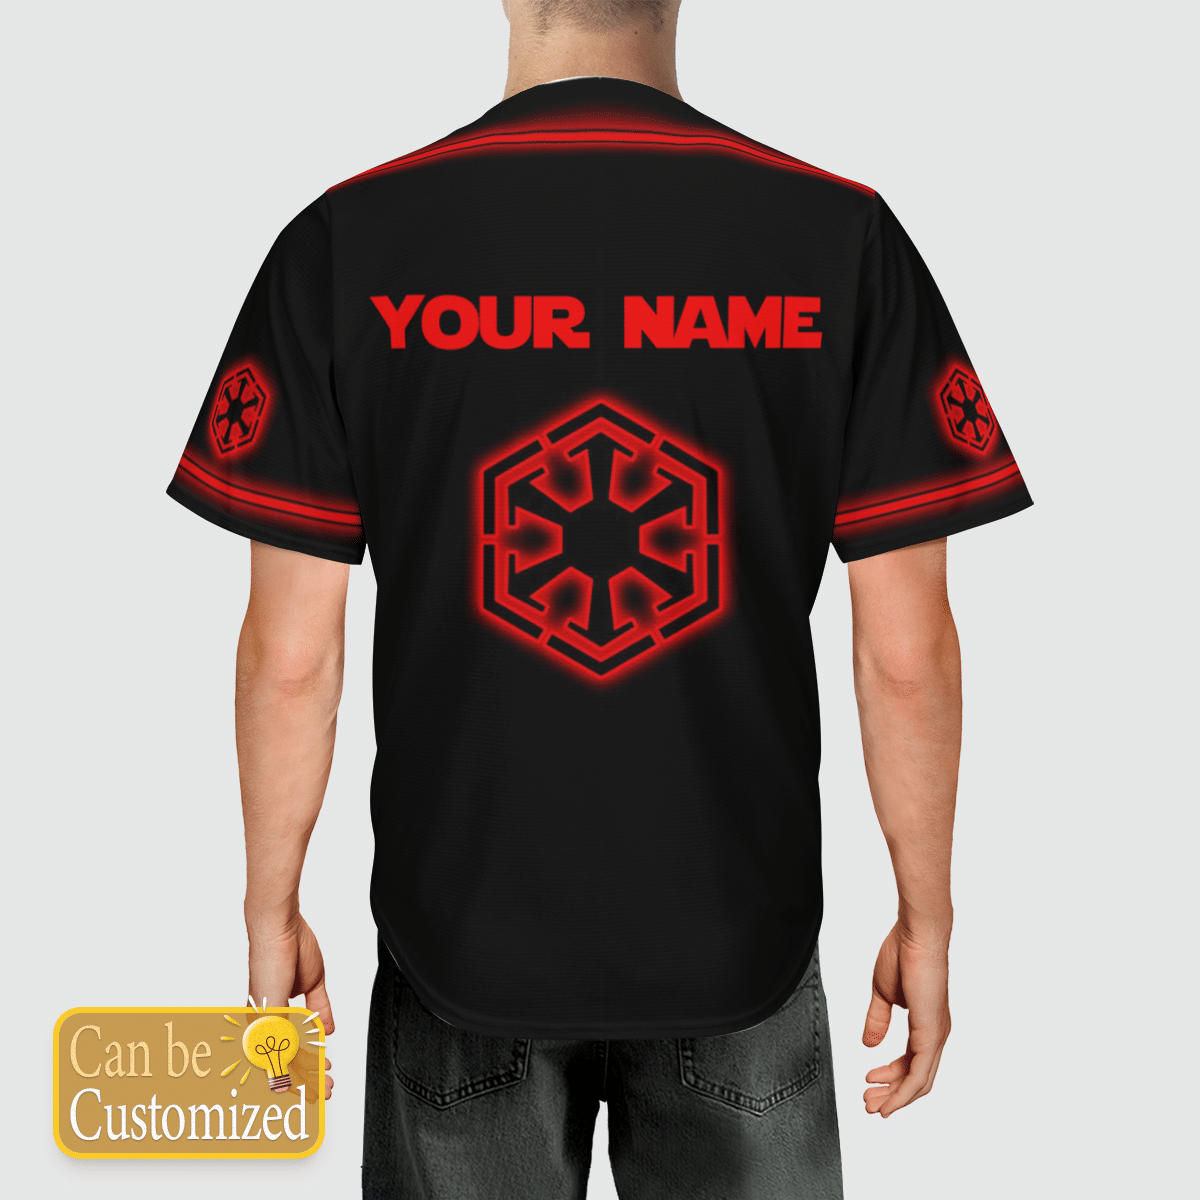 Sith Empire custom name baseball shirt 3